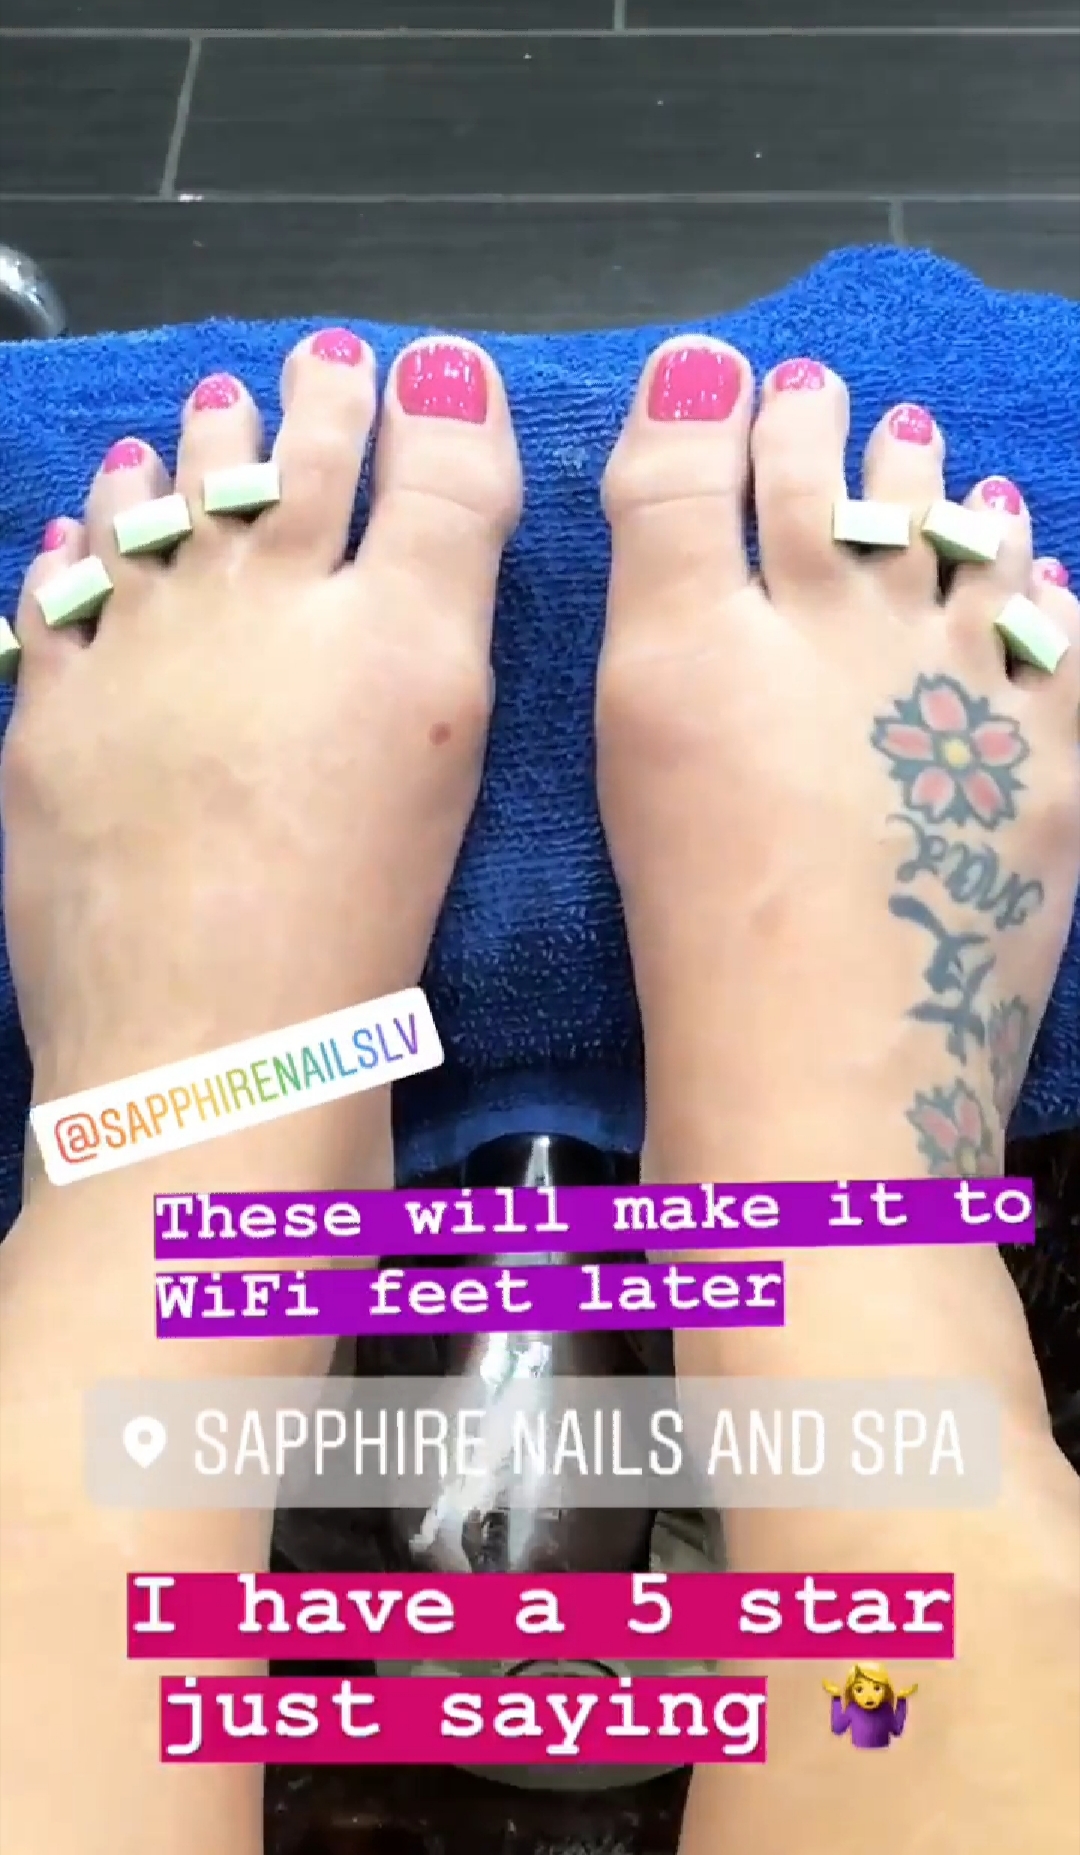 Such gorgeous feet as well is a bonus! 